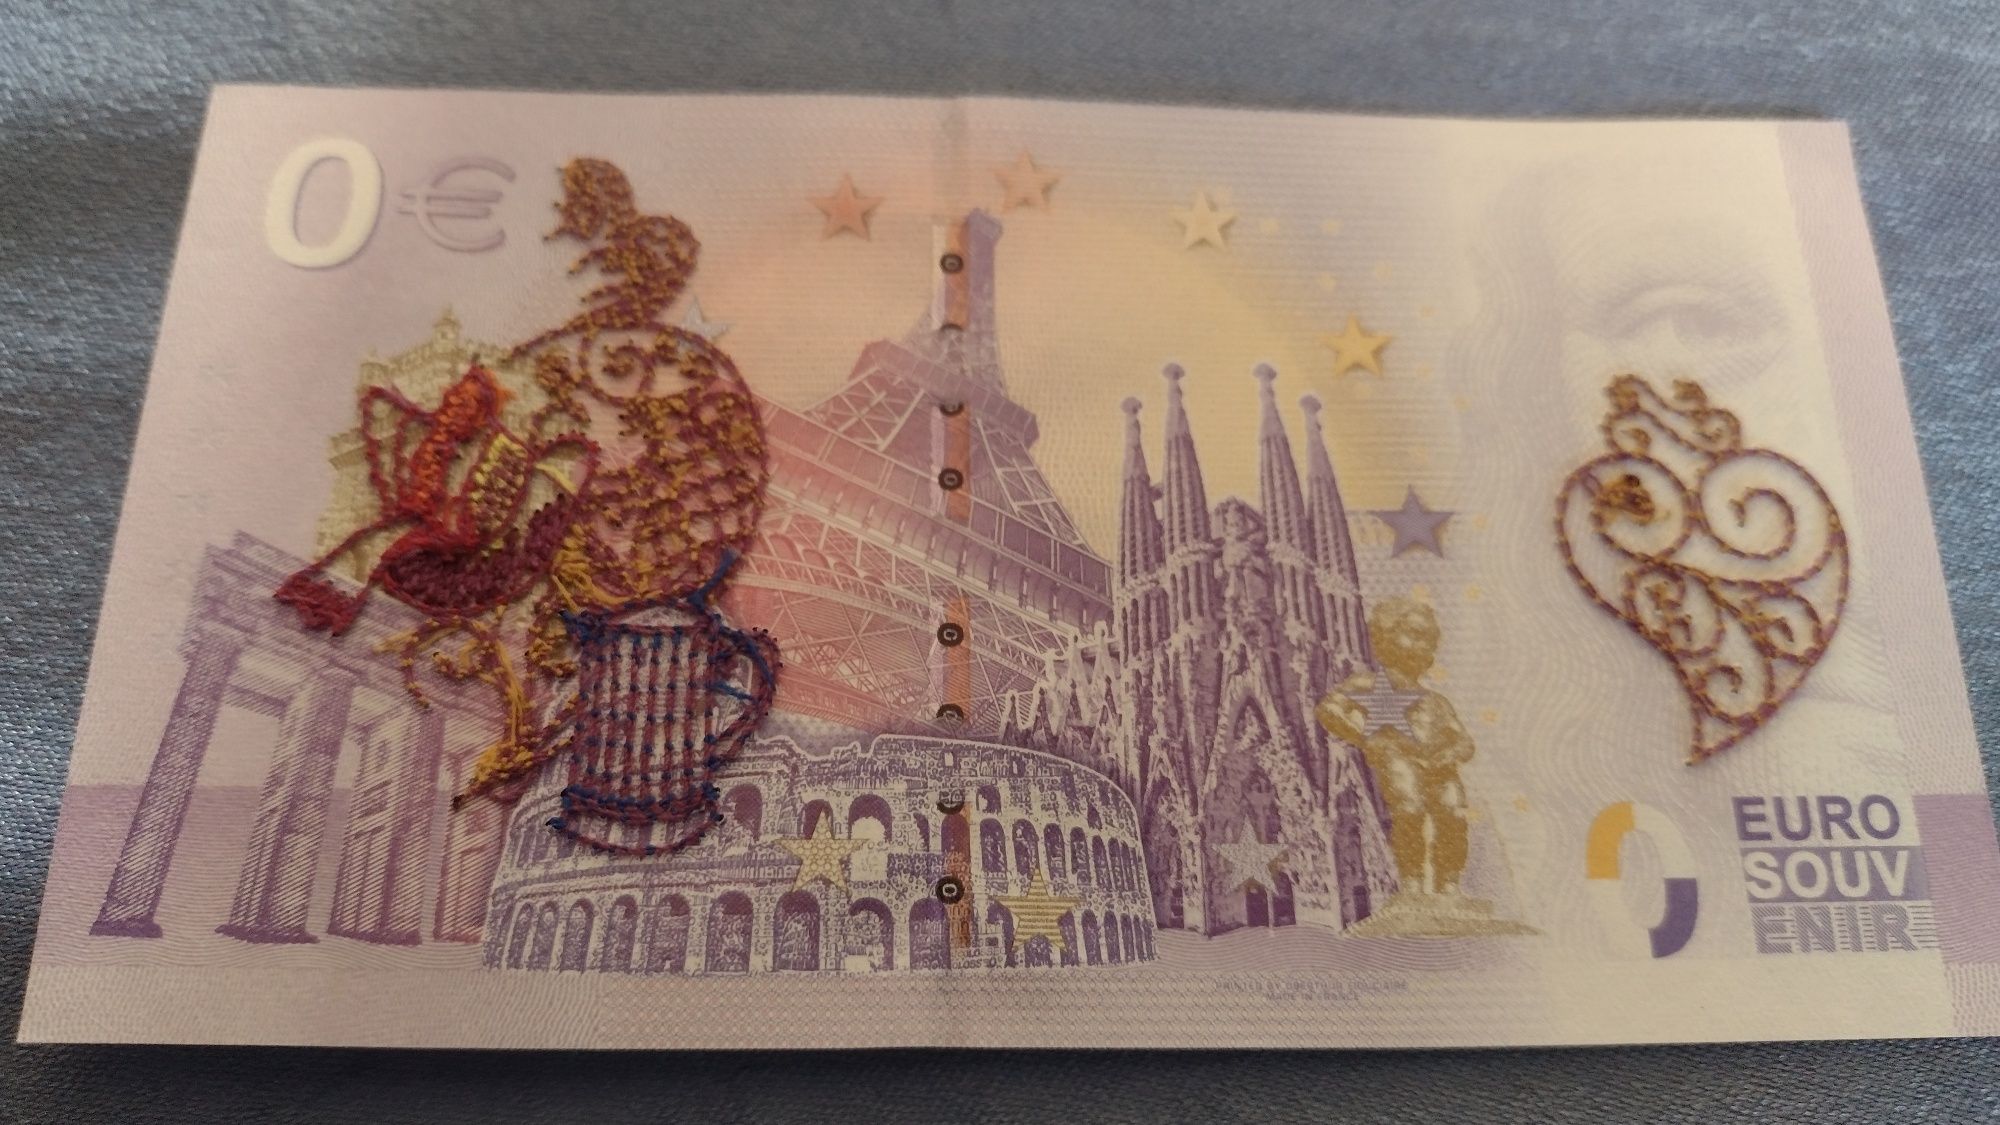 Banknot 0 euro alto minho haftowany color kolor kolorowe